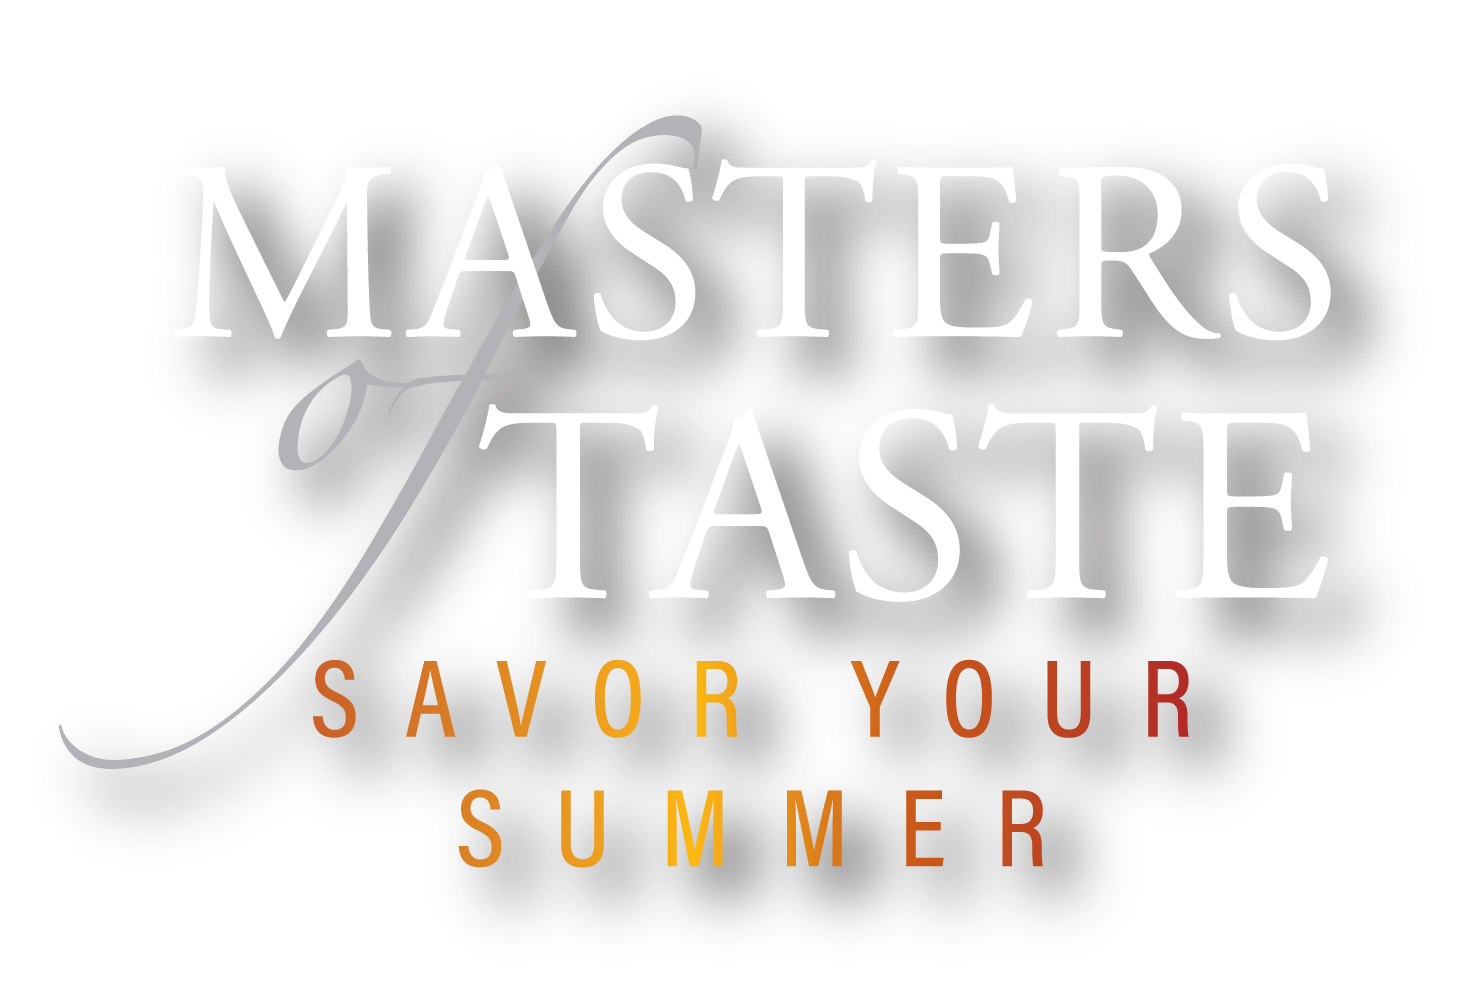 Masters of Taste - Savor your Summer logo